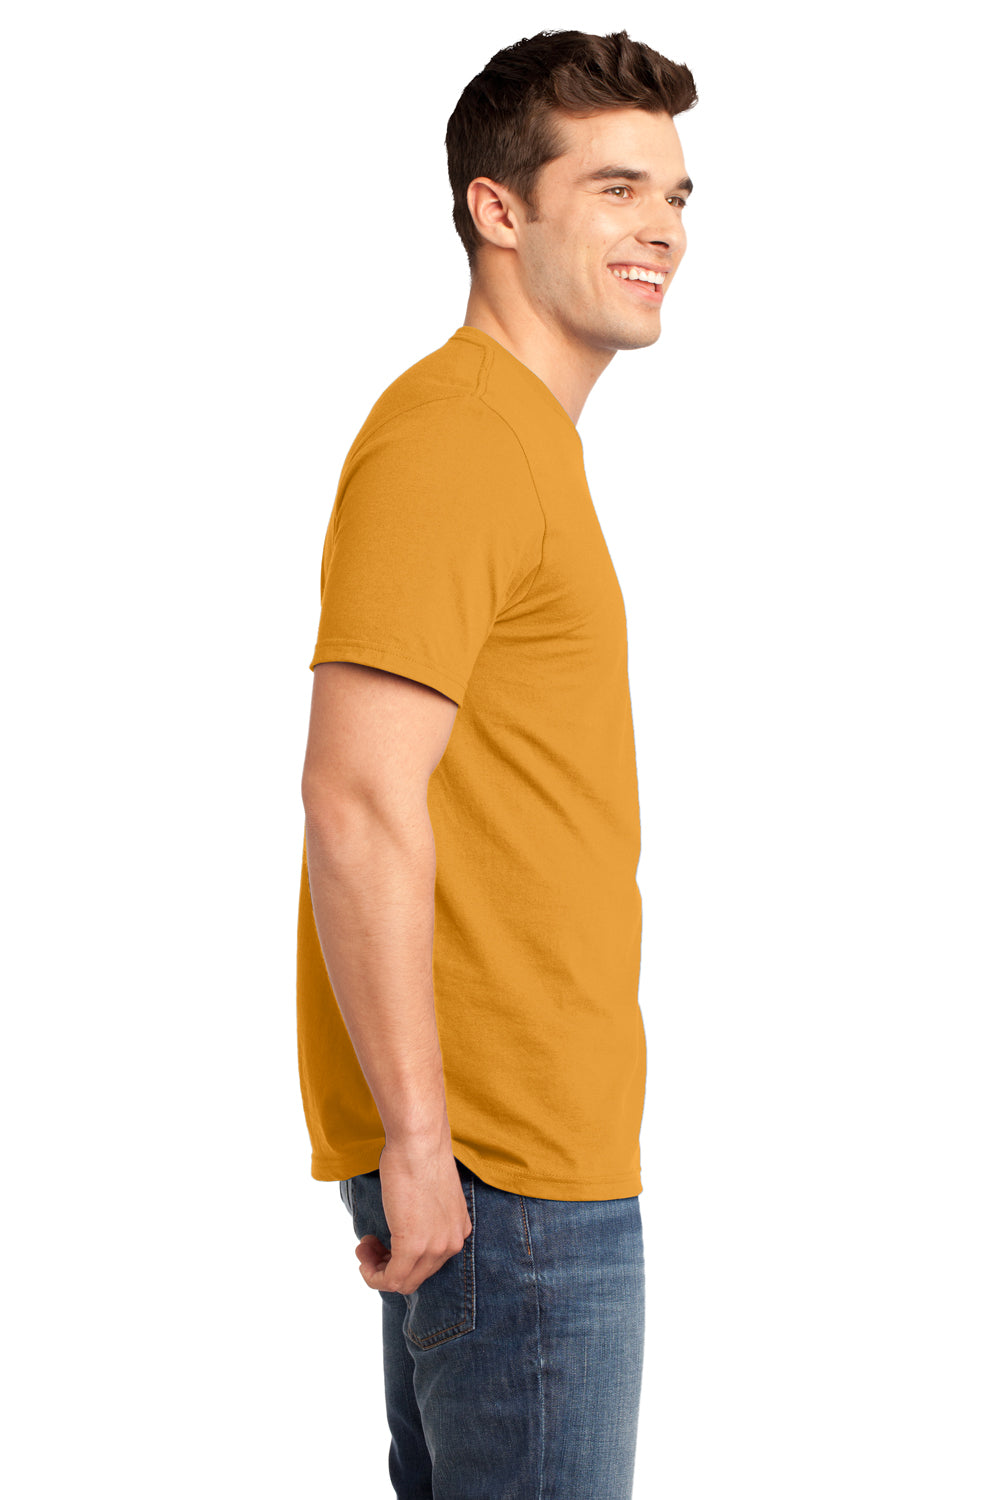 District DT6000 Mens Very Important Short Sleeve Crewneck T-Shirt Gold Side